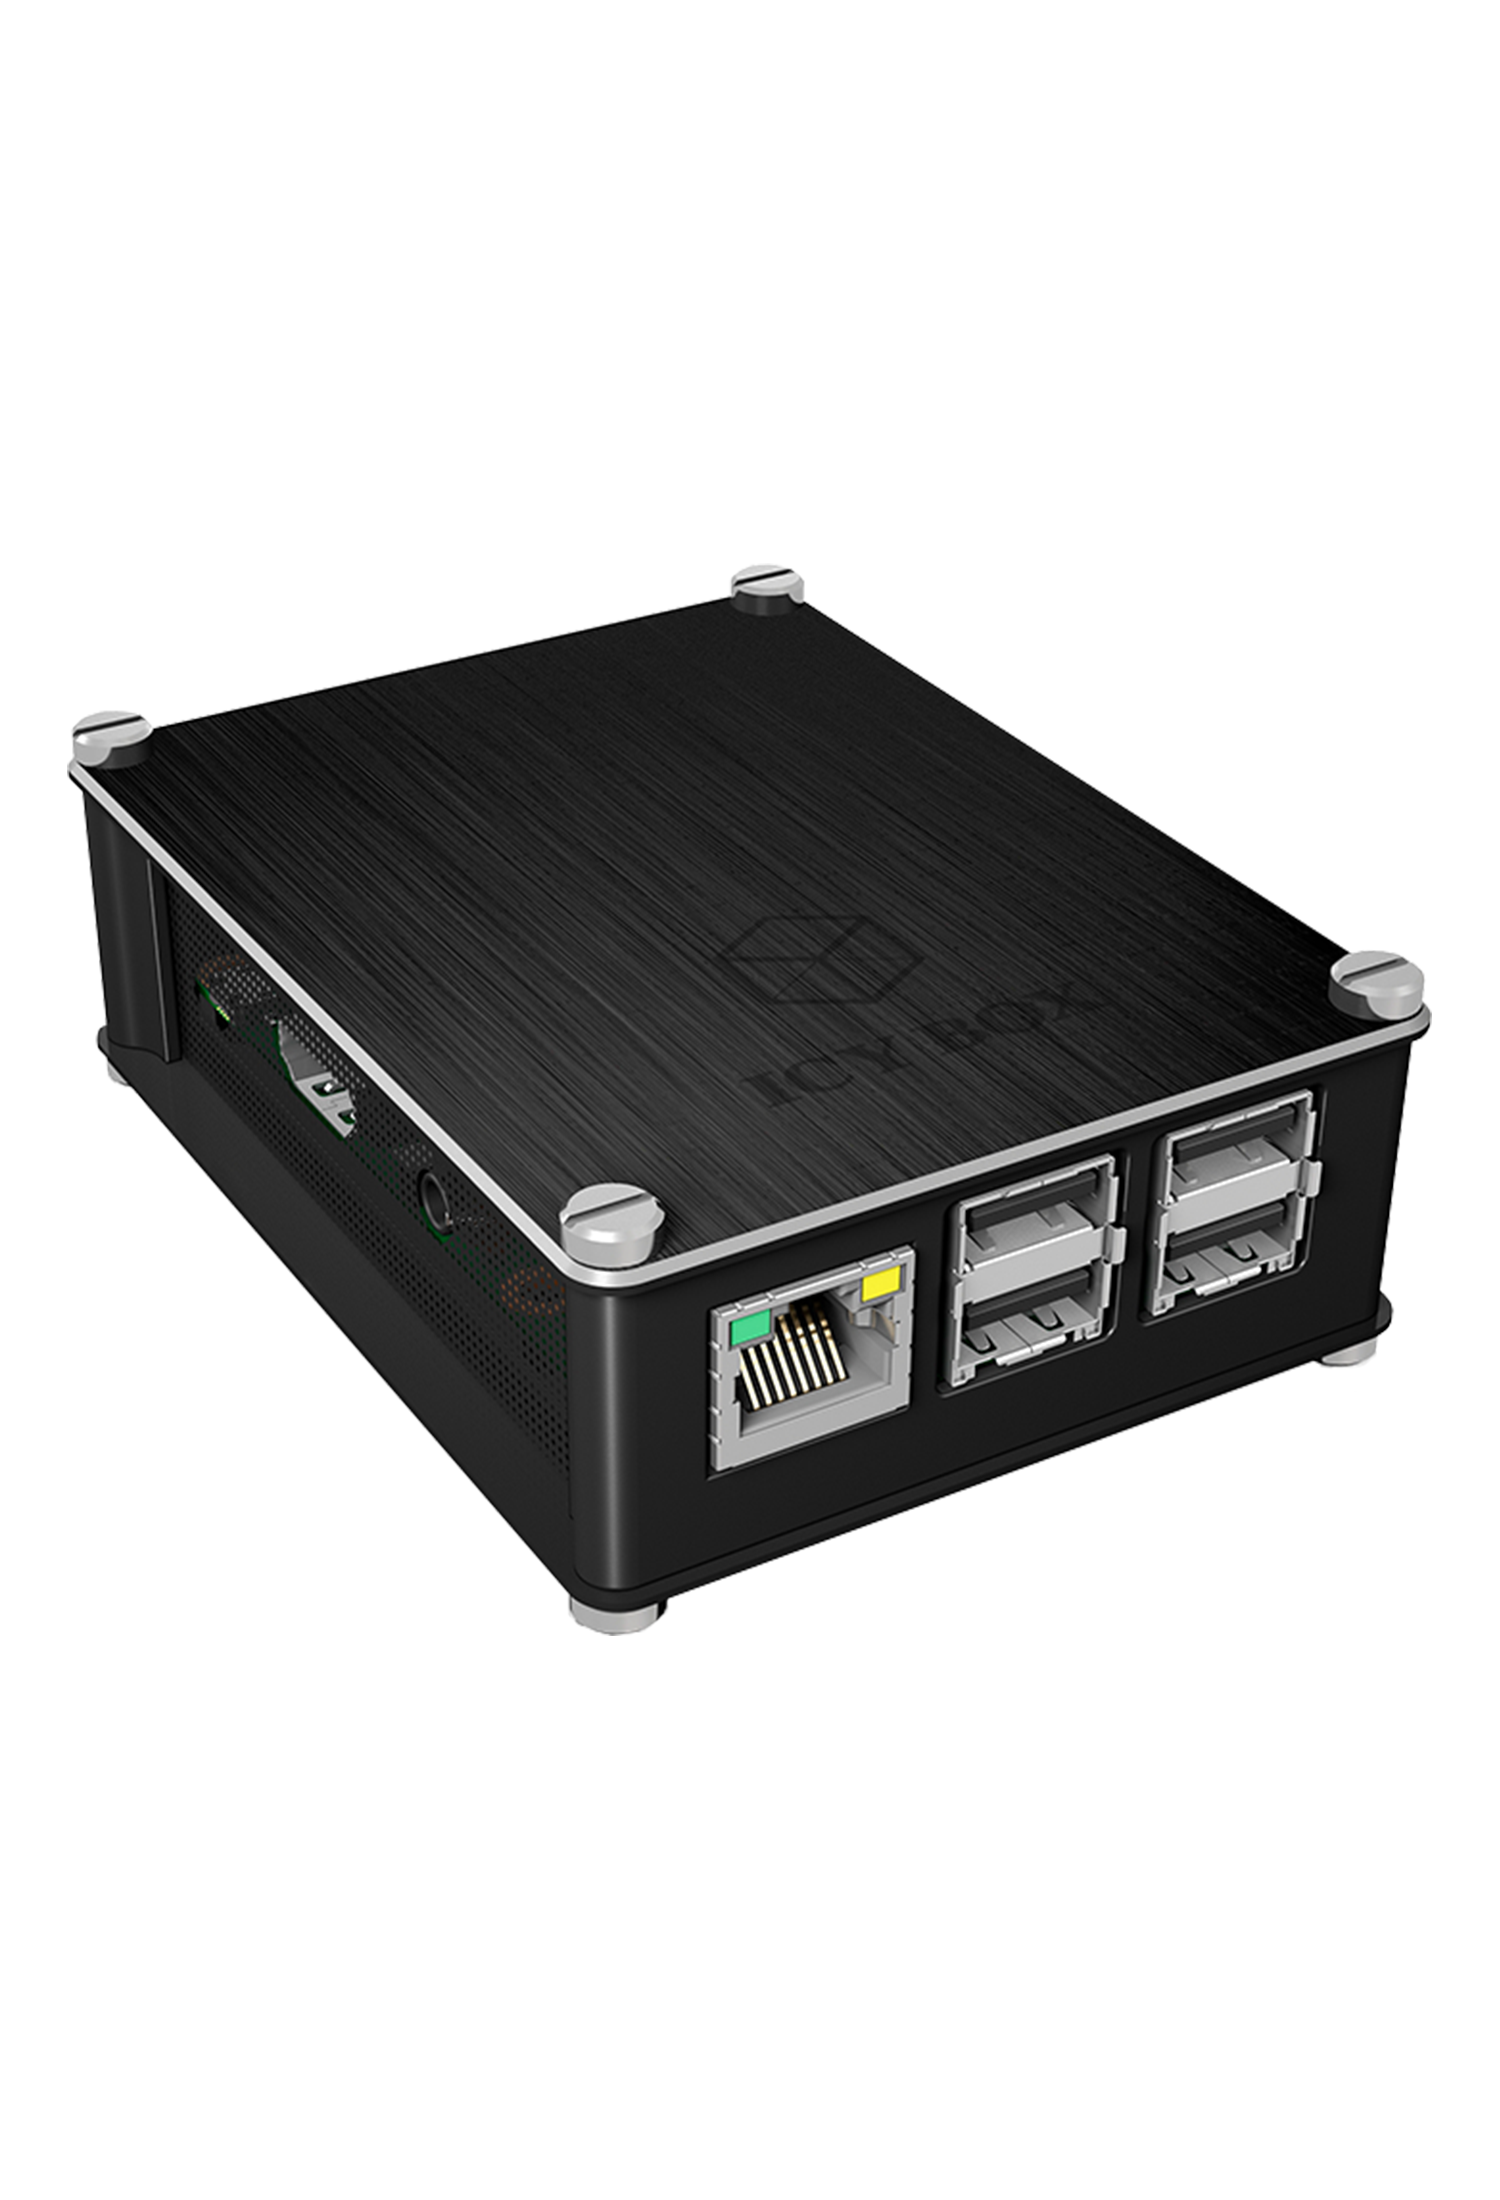 ICY BOX-RP102 Gehäuse für Raspberry Pi 2B & 3B